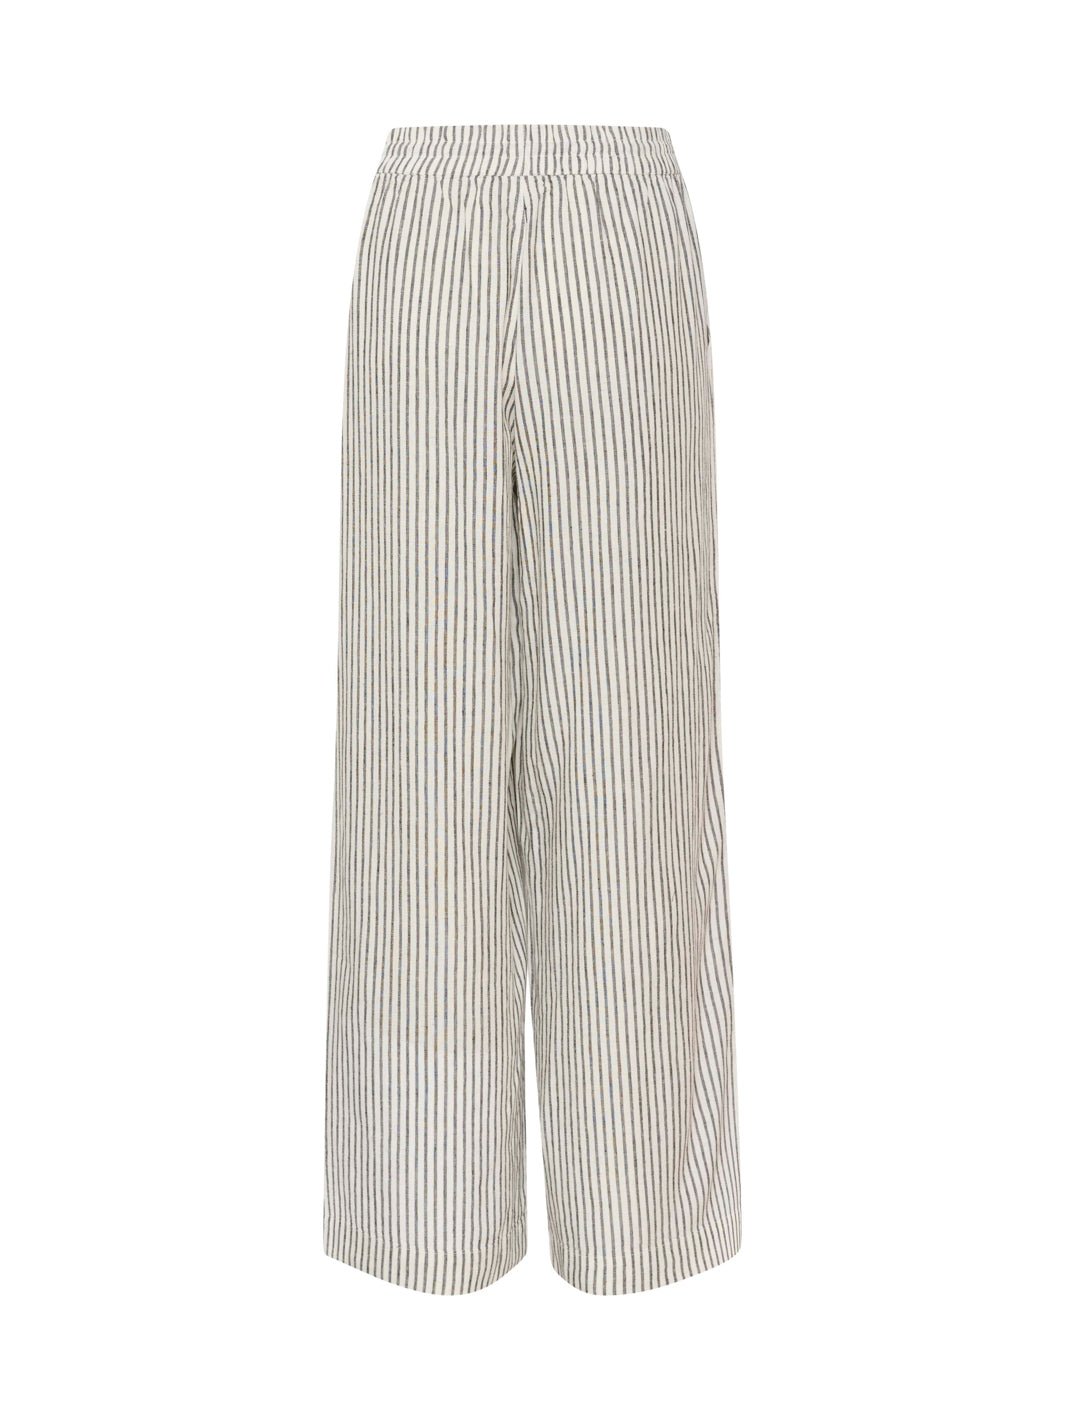 Kaffe KAmilia long wide pants HW chalk/black stripe - Online-Mode